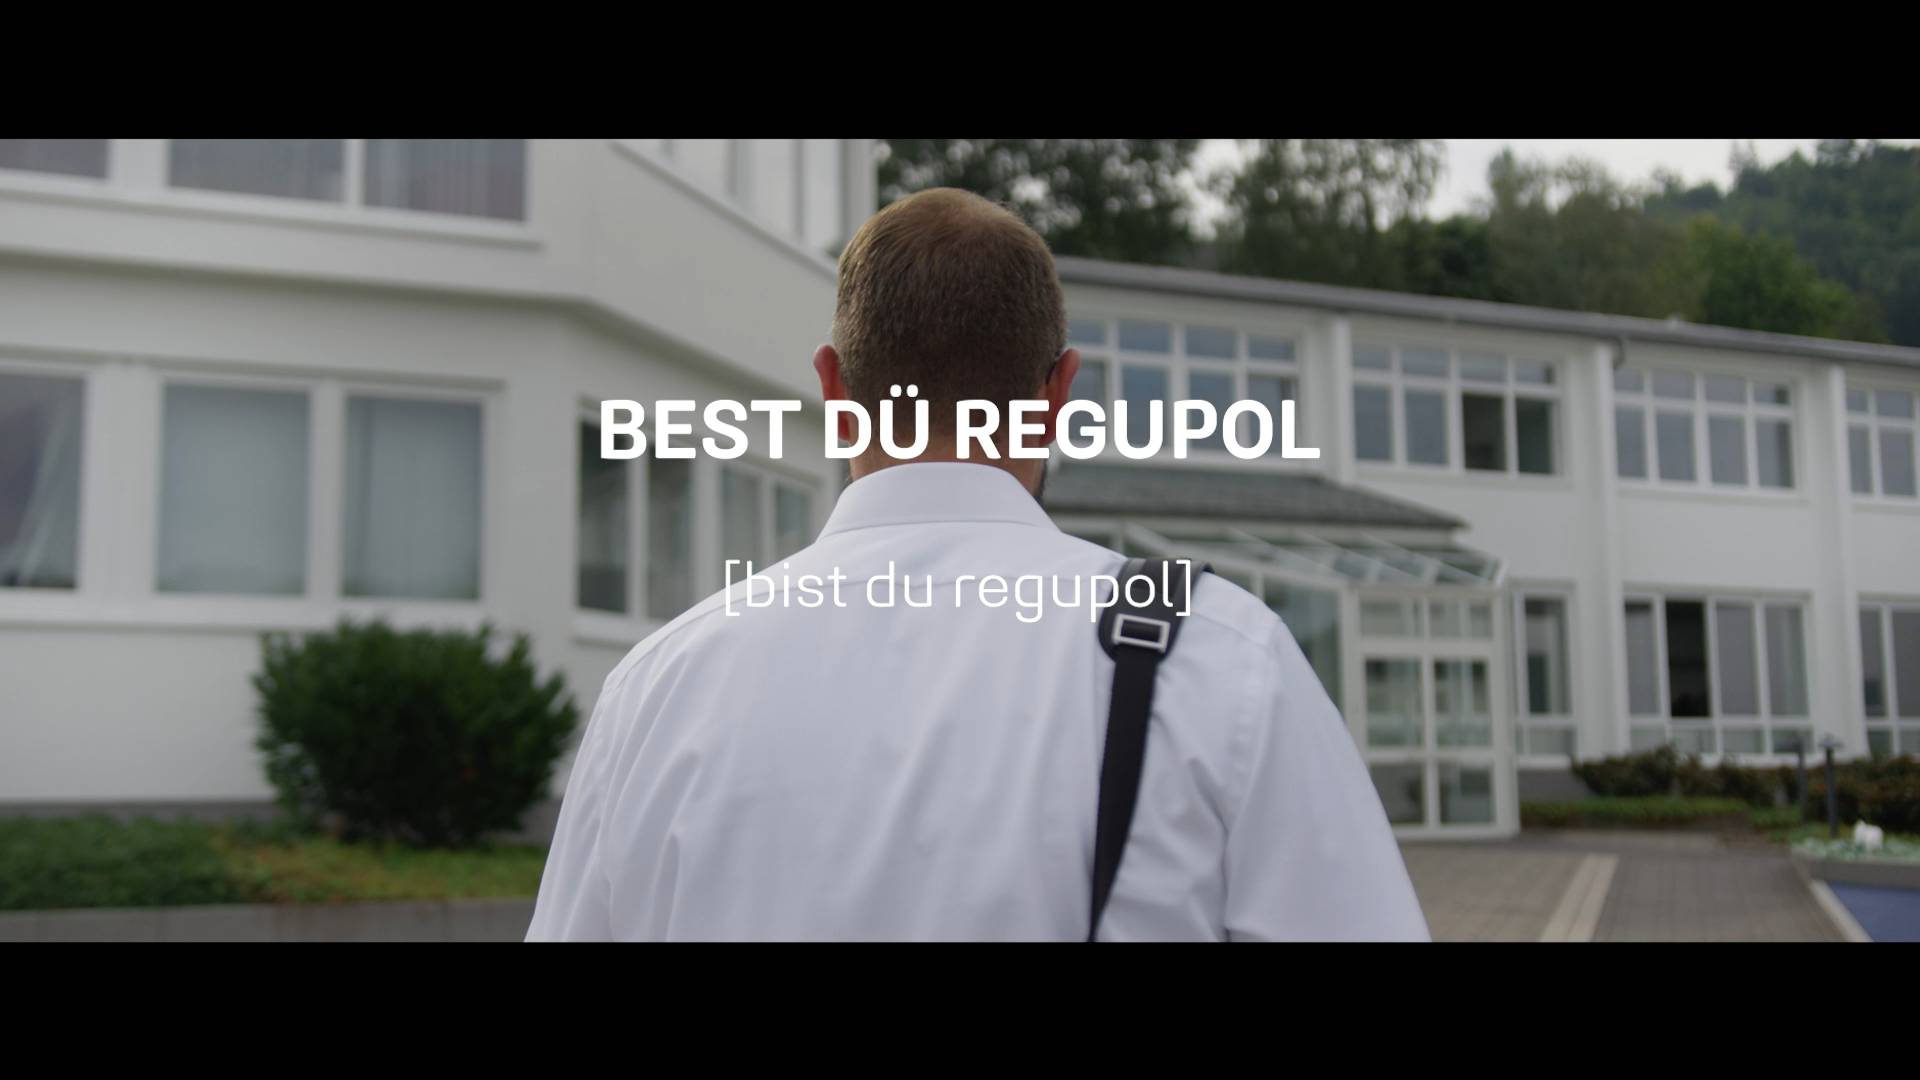 Imagefilm: Best dü REGUPOL?